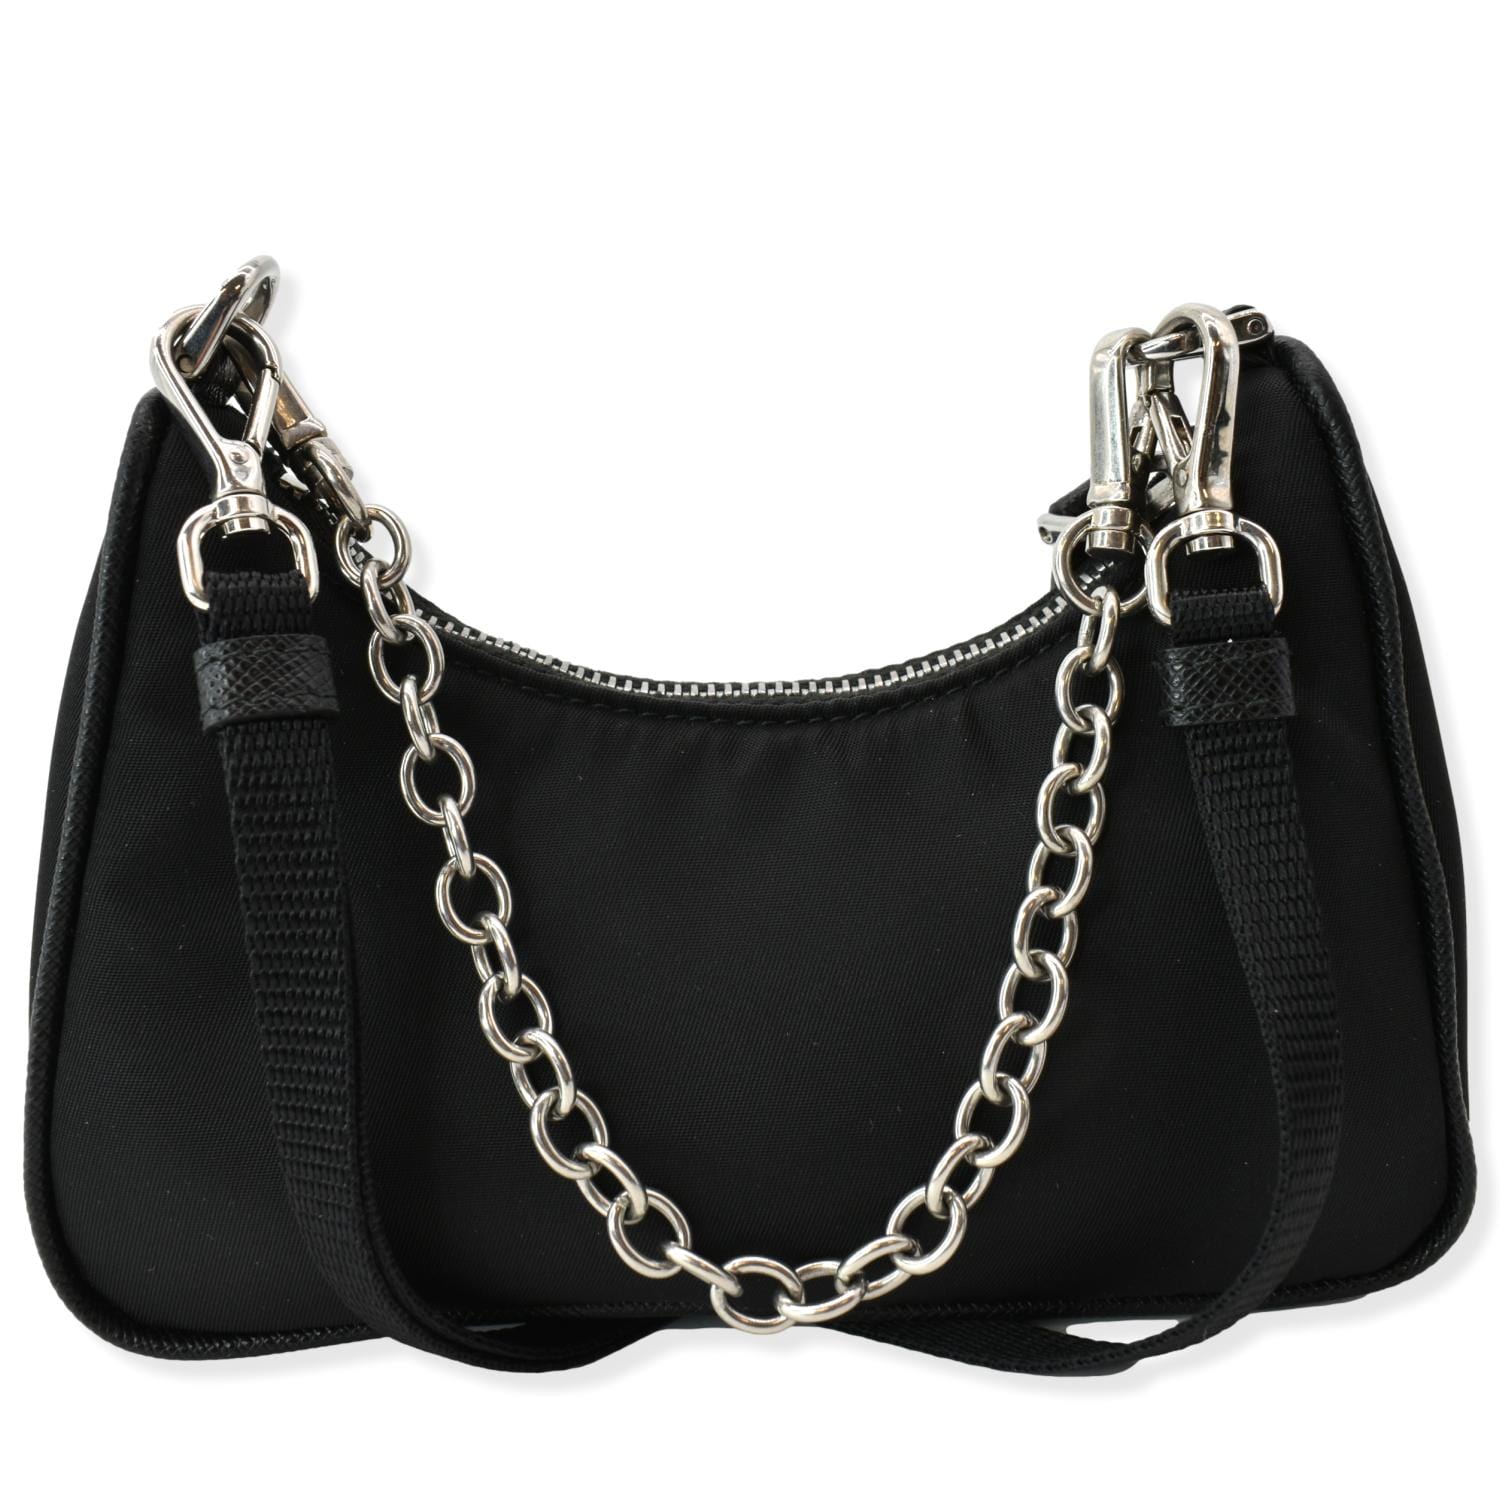 Prada Nylon Shoulder Bag with Chain Handle